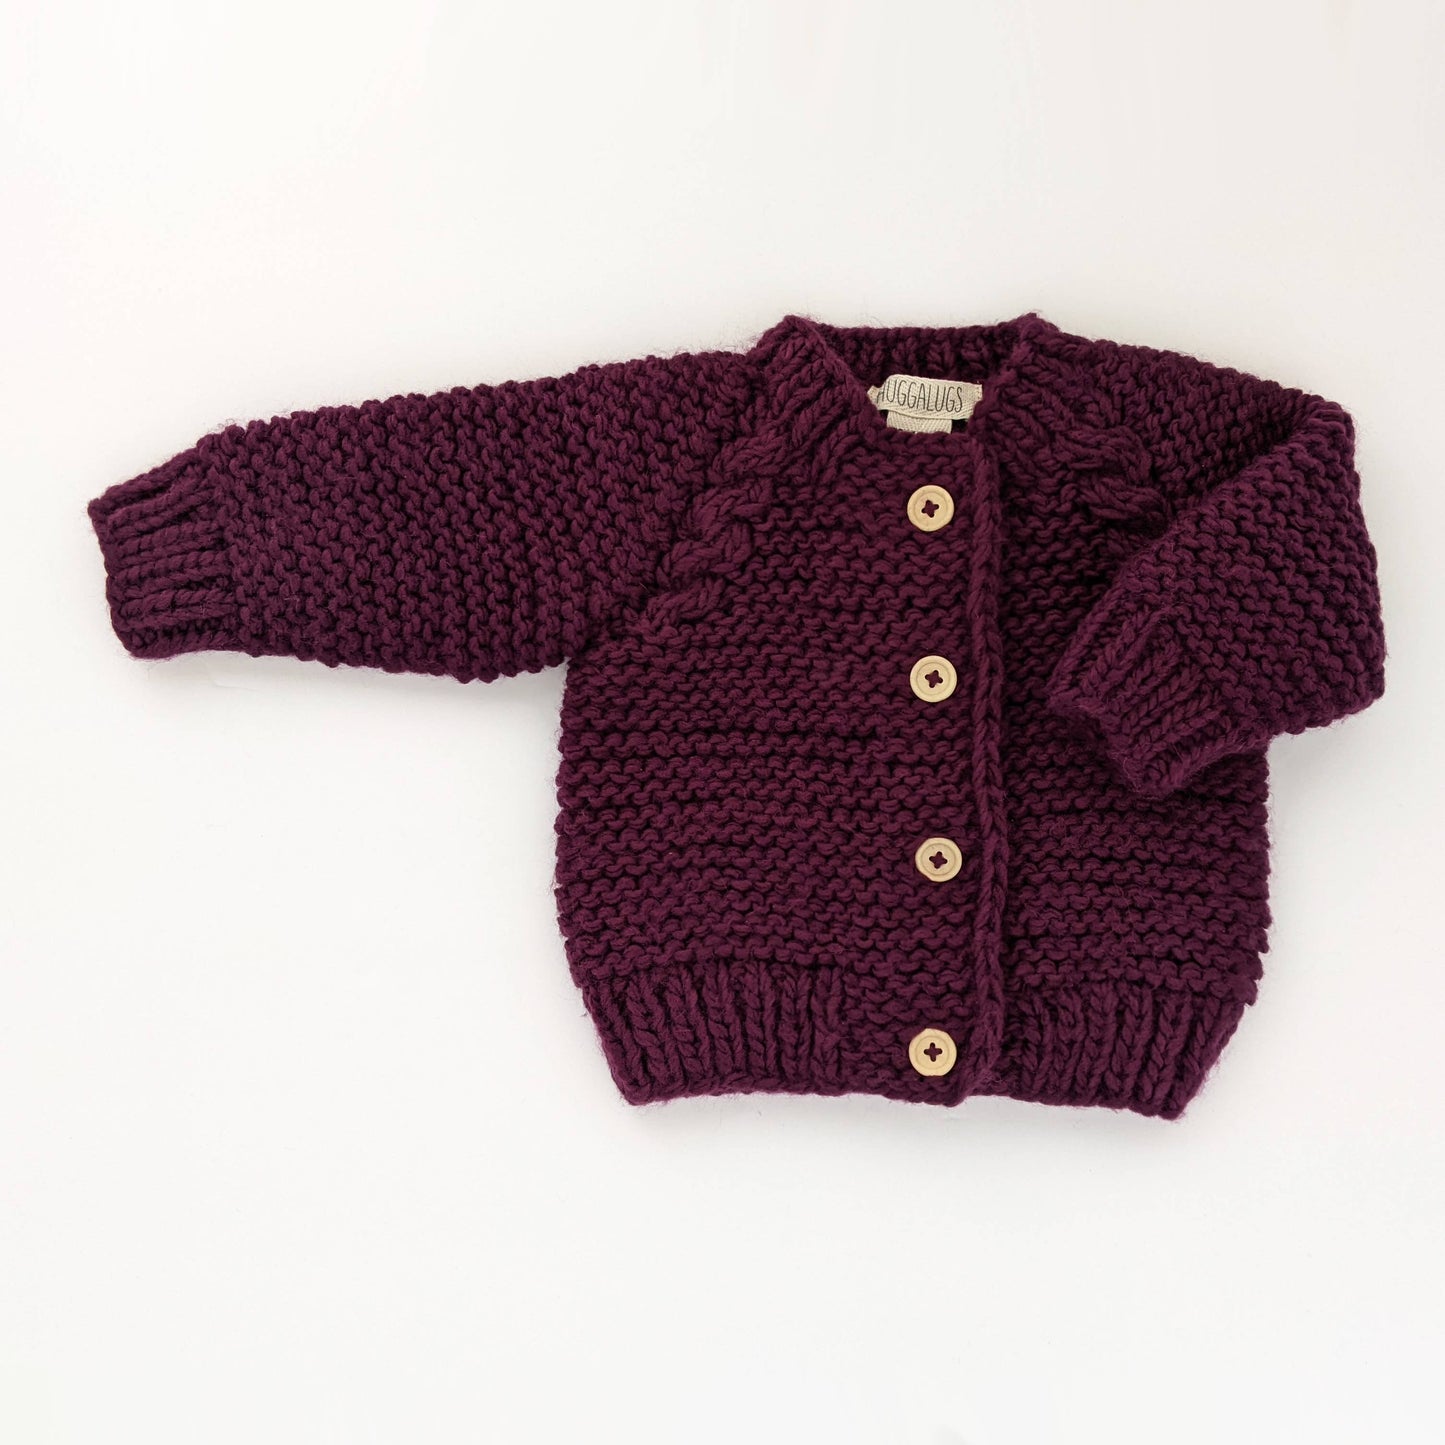 Huggalugs - Plum Garter Stitch Cardigan Sweater